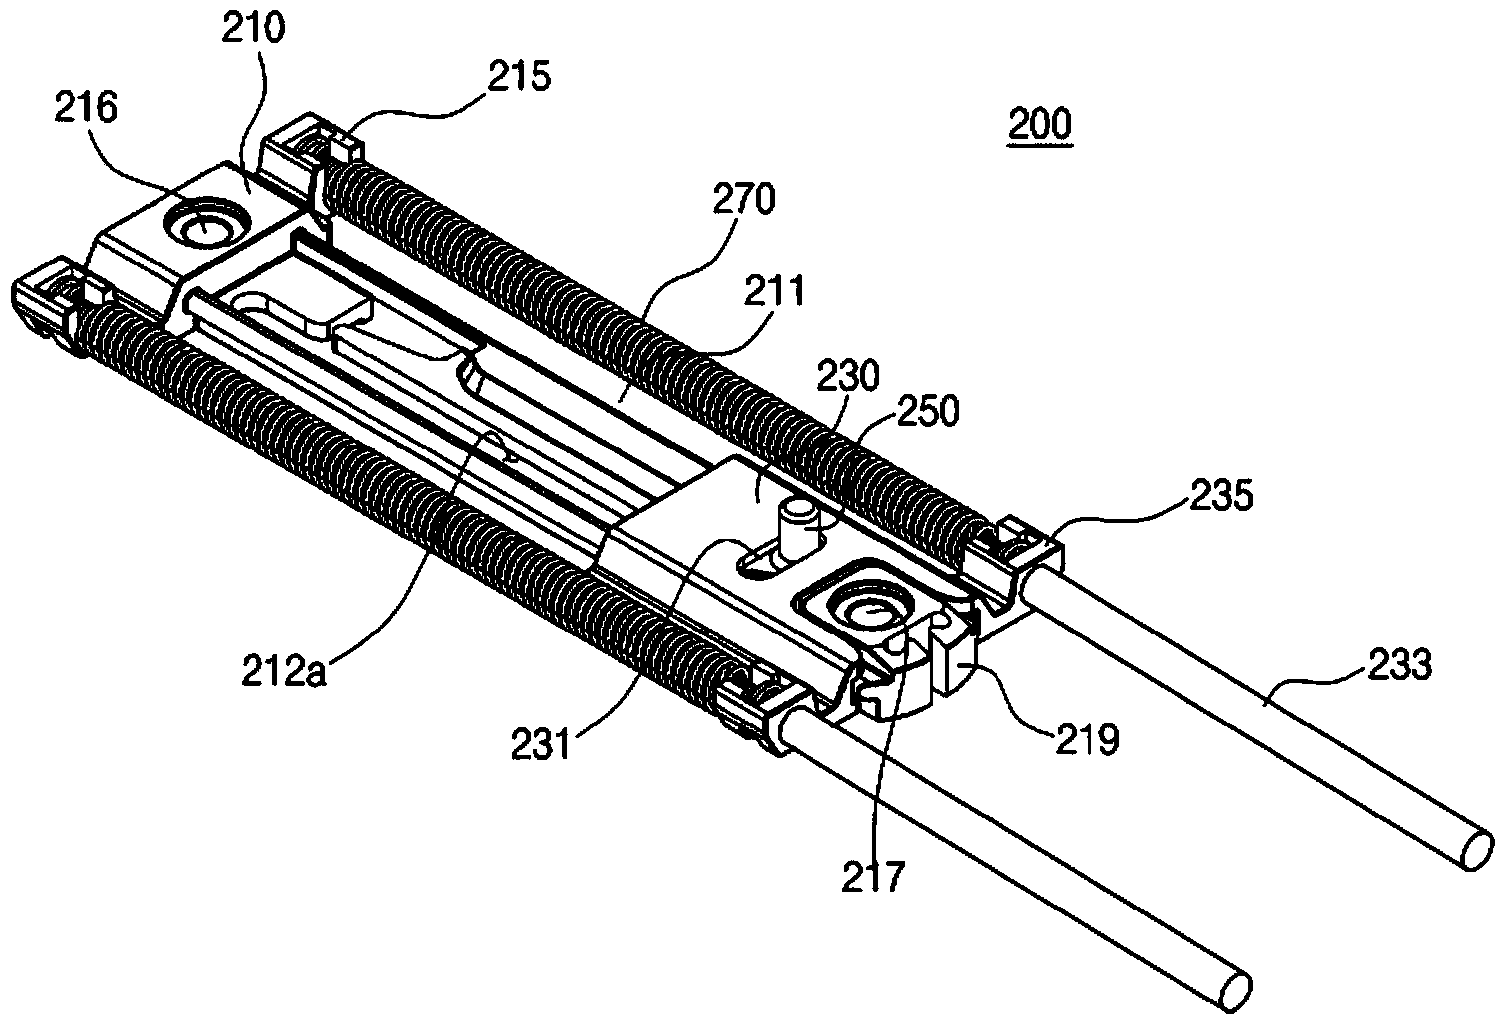 Drawer sliding device